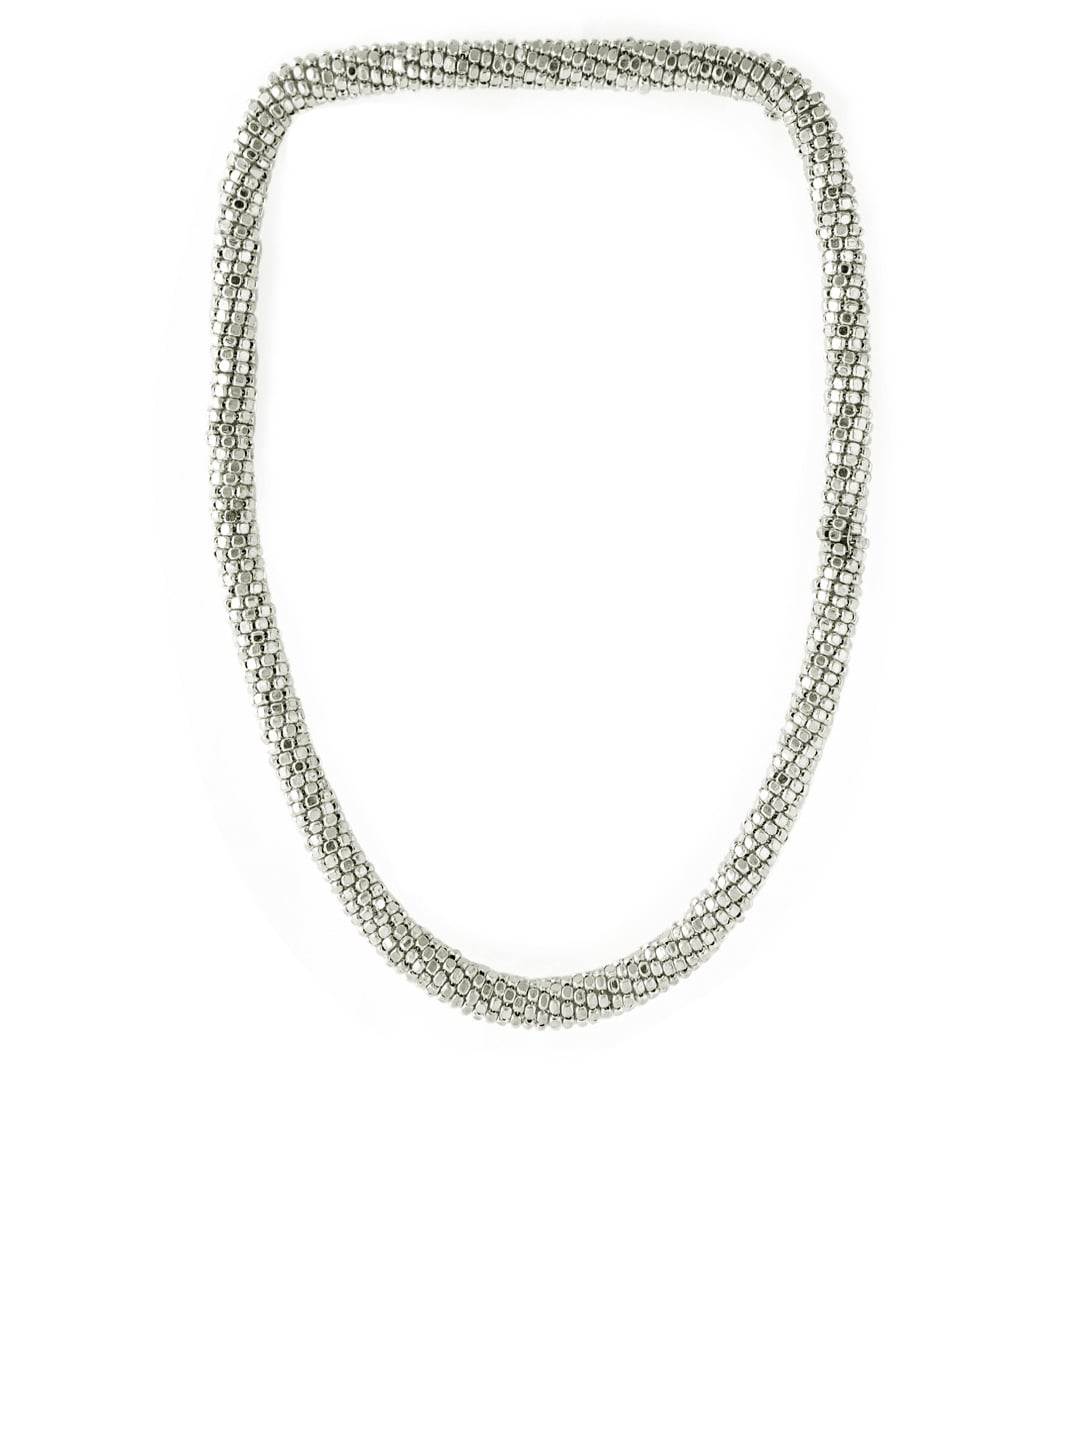 Pitaraa Silver Beaded Sheet Necklace